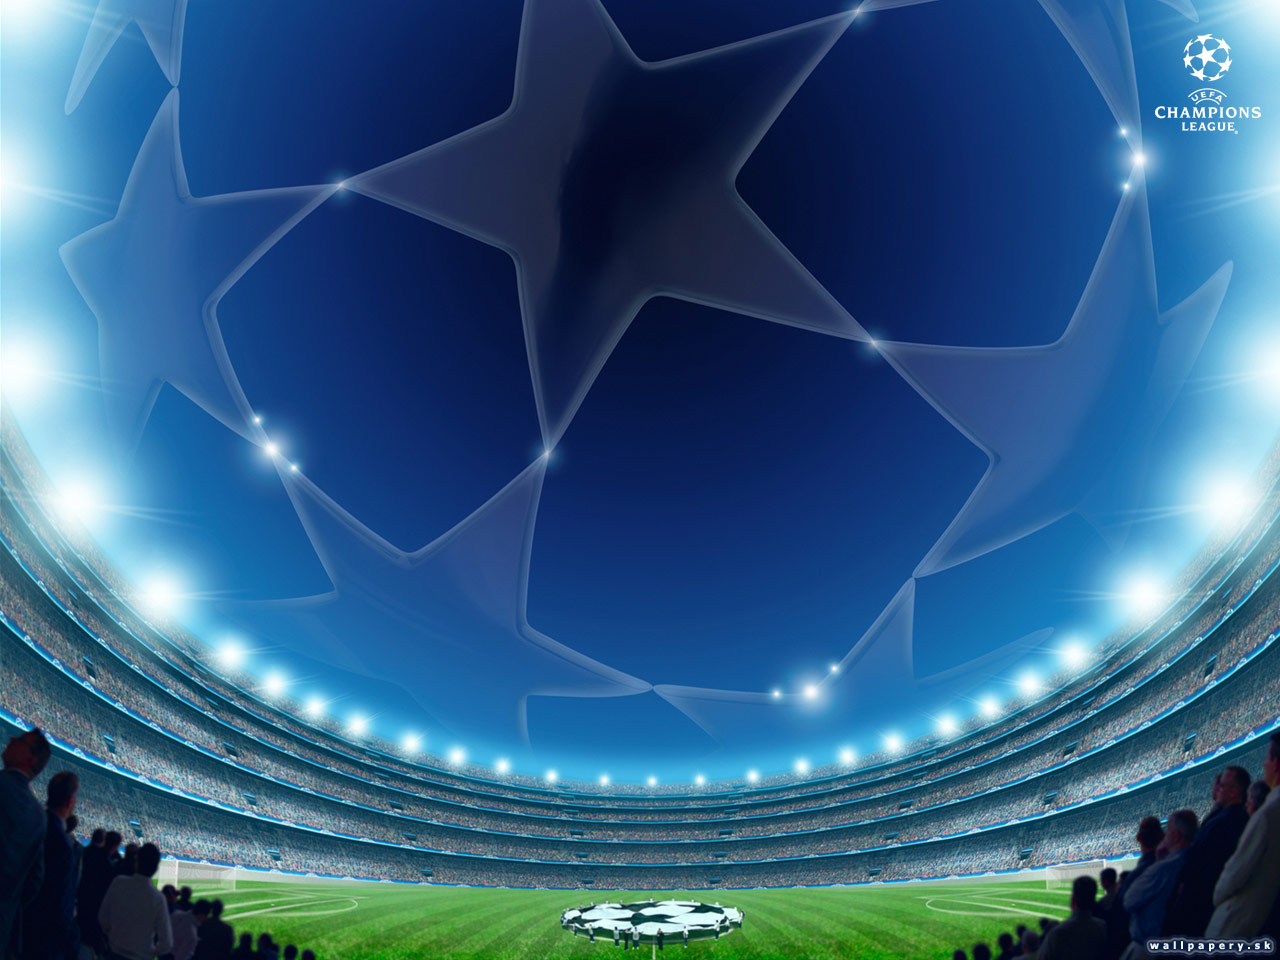 UEFA Champions League 2006-2007 - wallpaper 4